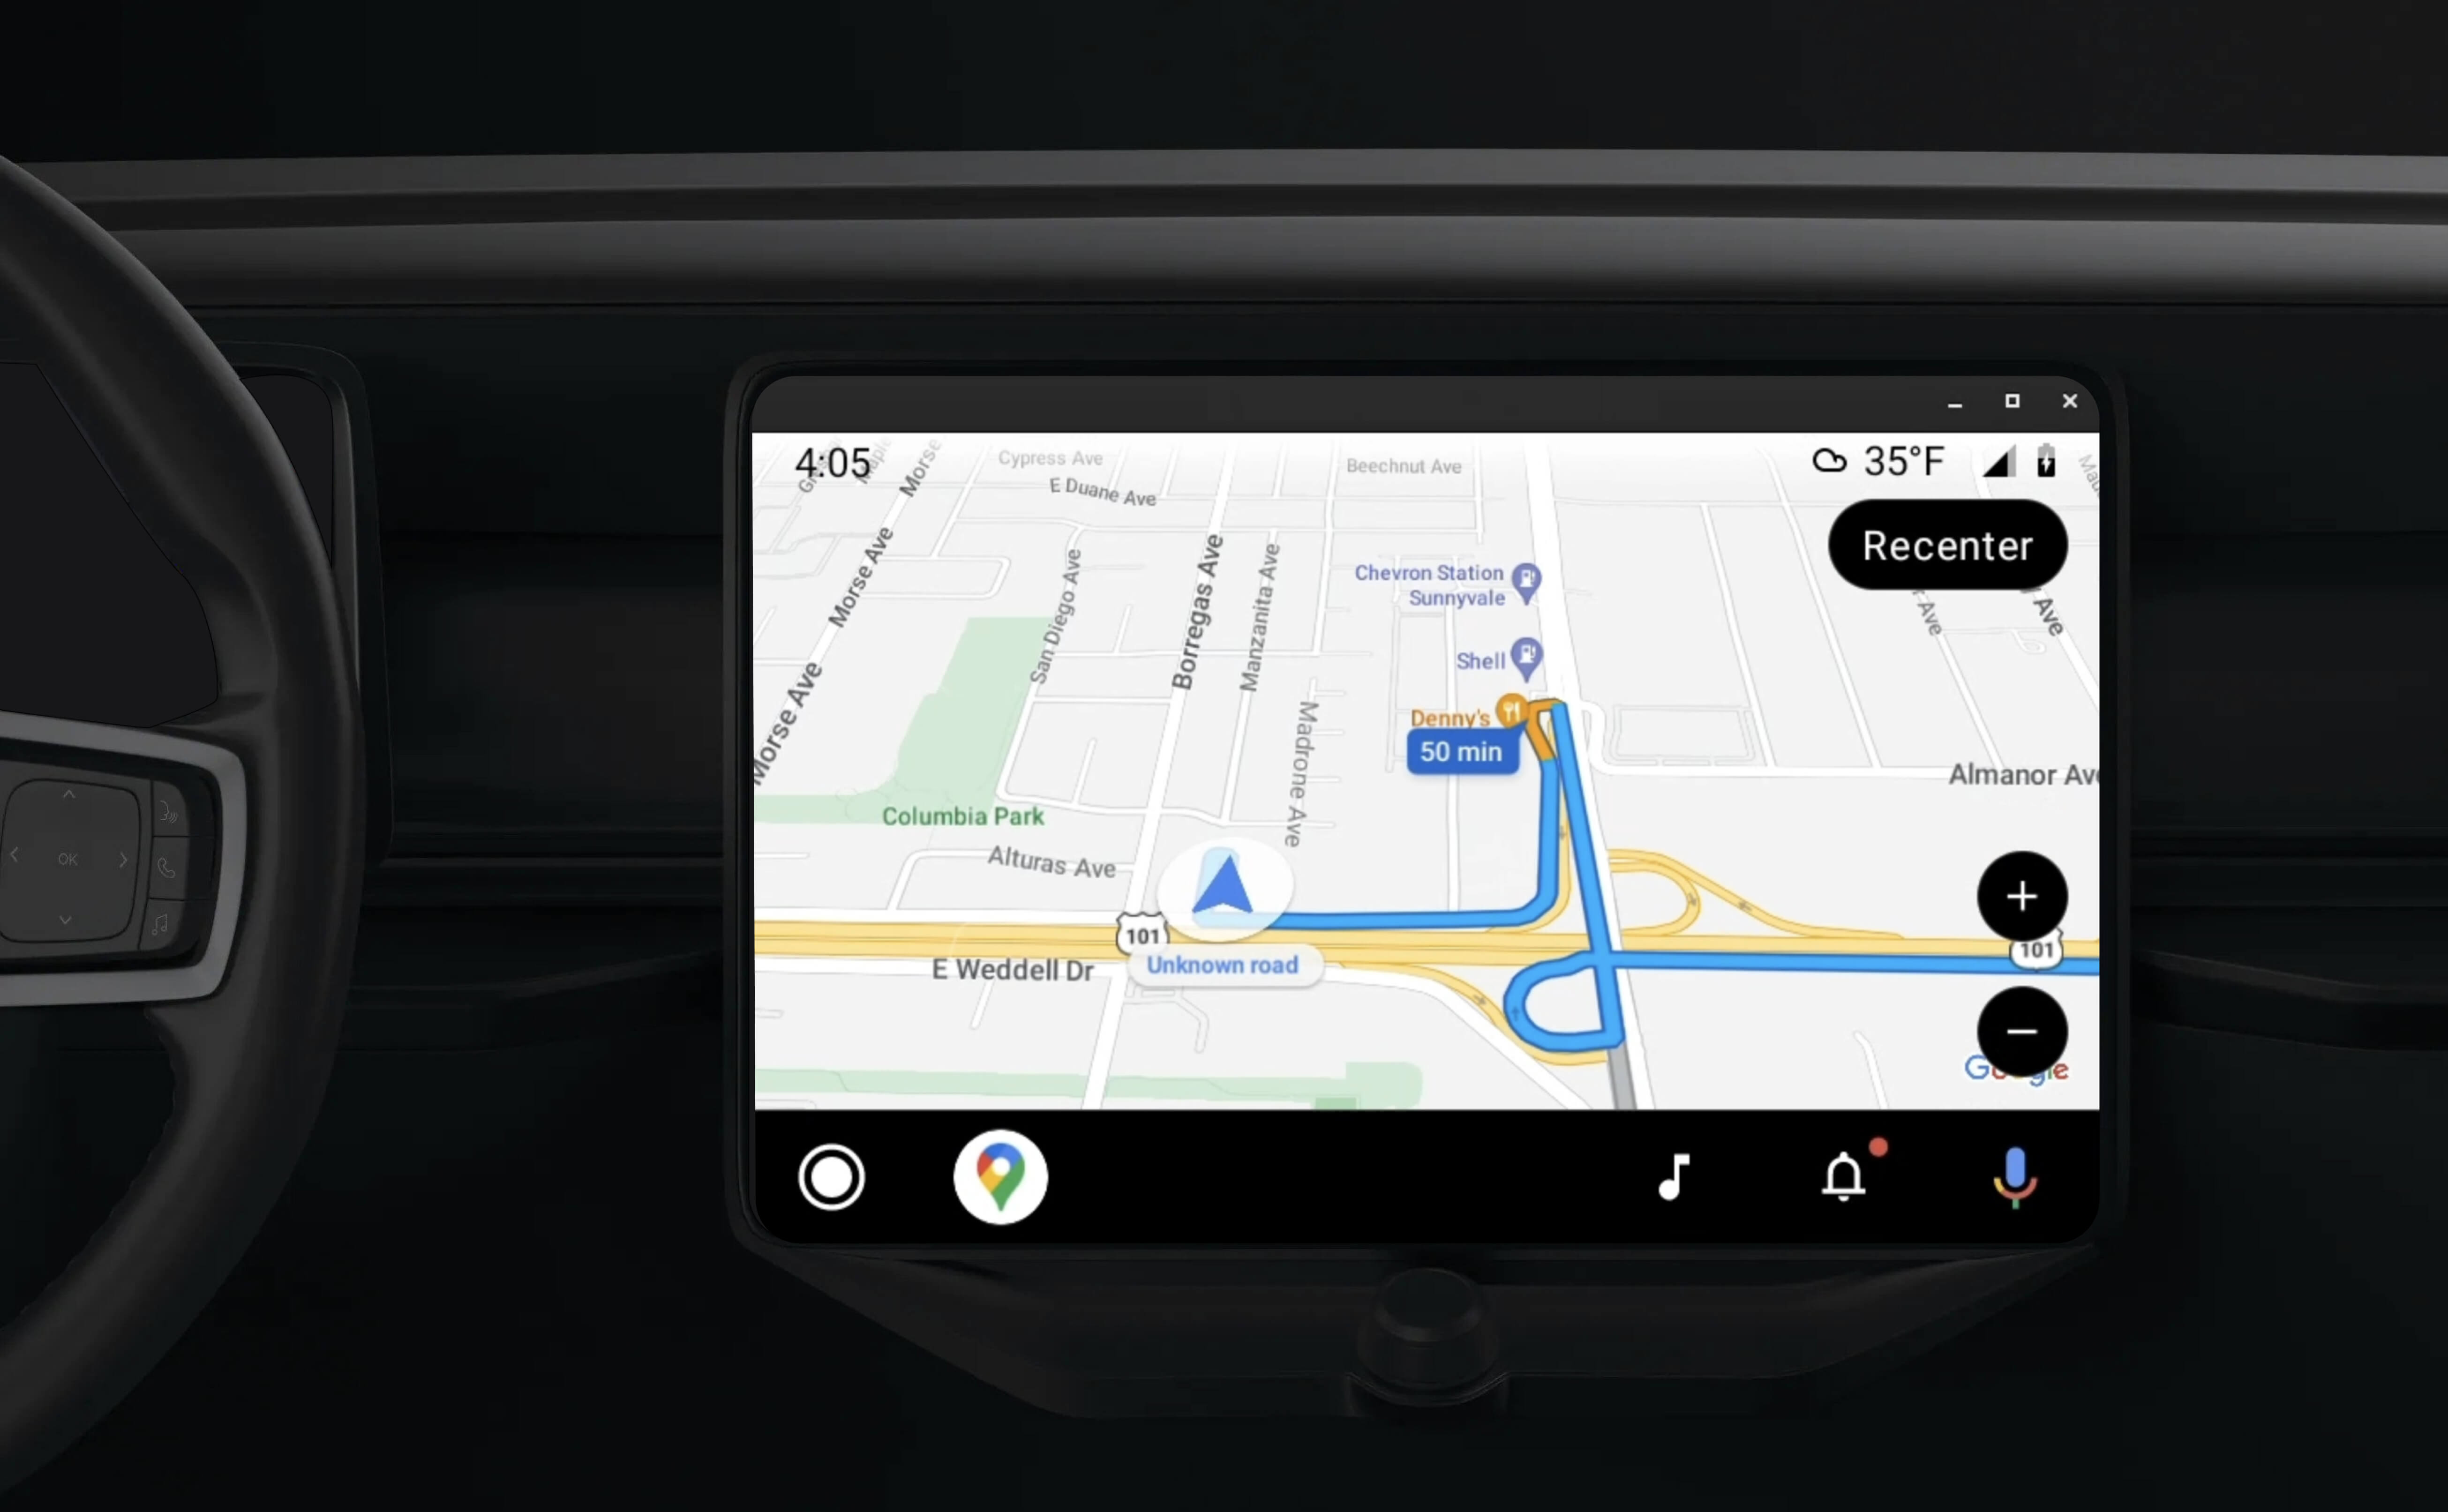 Head unit in-dash yang menampilkan navigasi terpandu menggunakan aplikasi yang diaktifkan
untuk Android Auto.